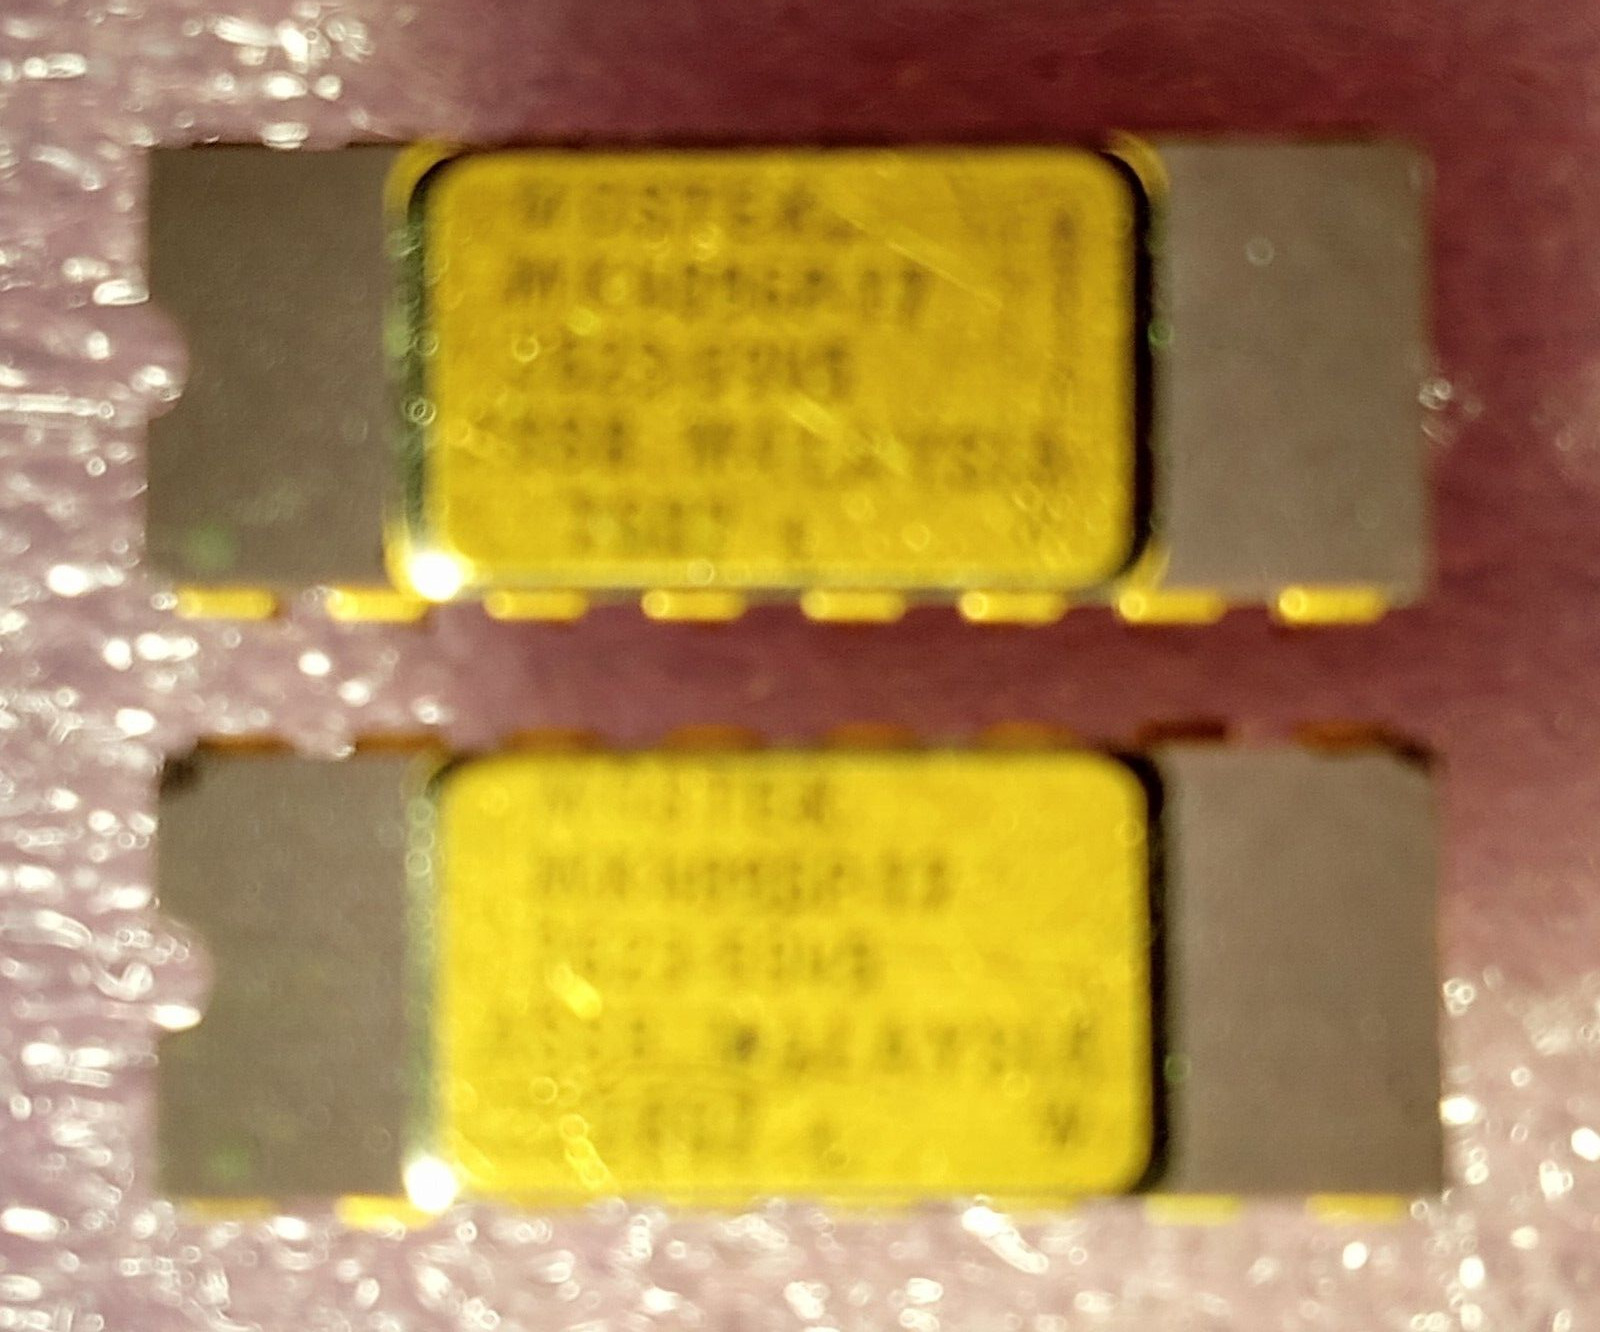 TRS-80 MOSTEK MK4096 Memory Gold CERDIP 4096x1 Dynamic RAM Vintage LOT of 2 PCS